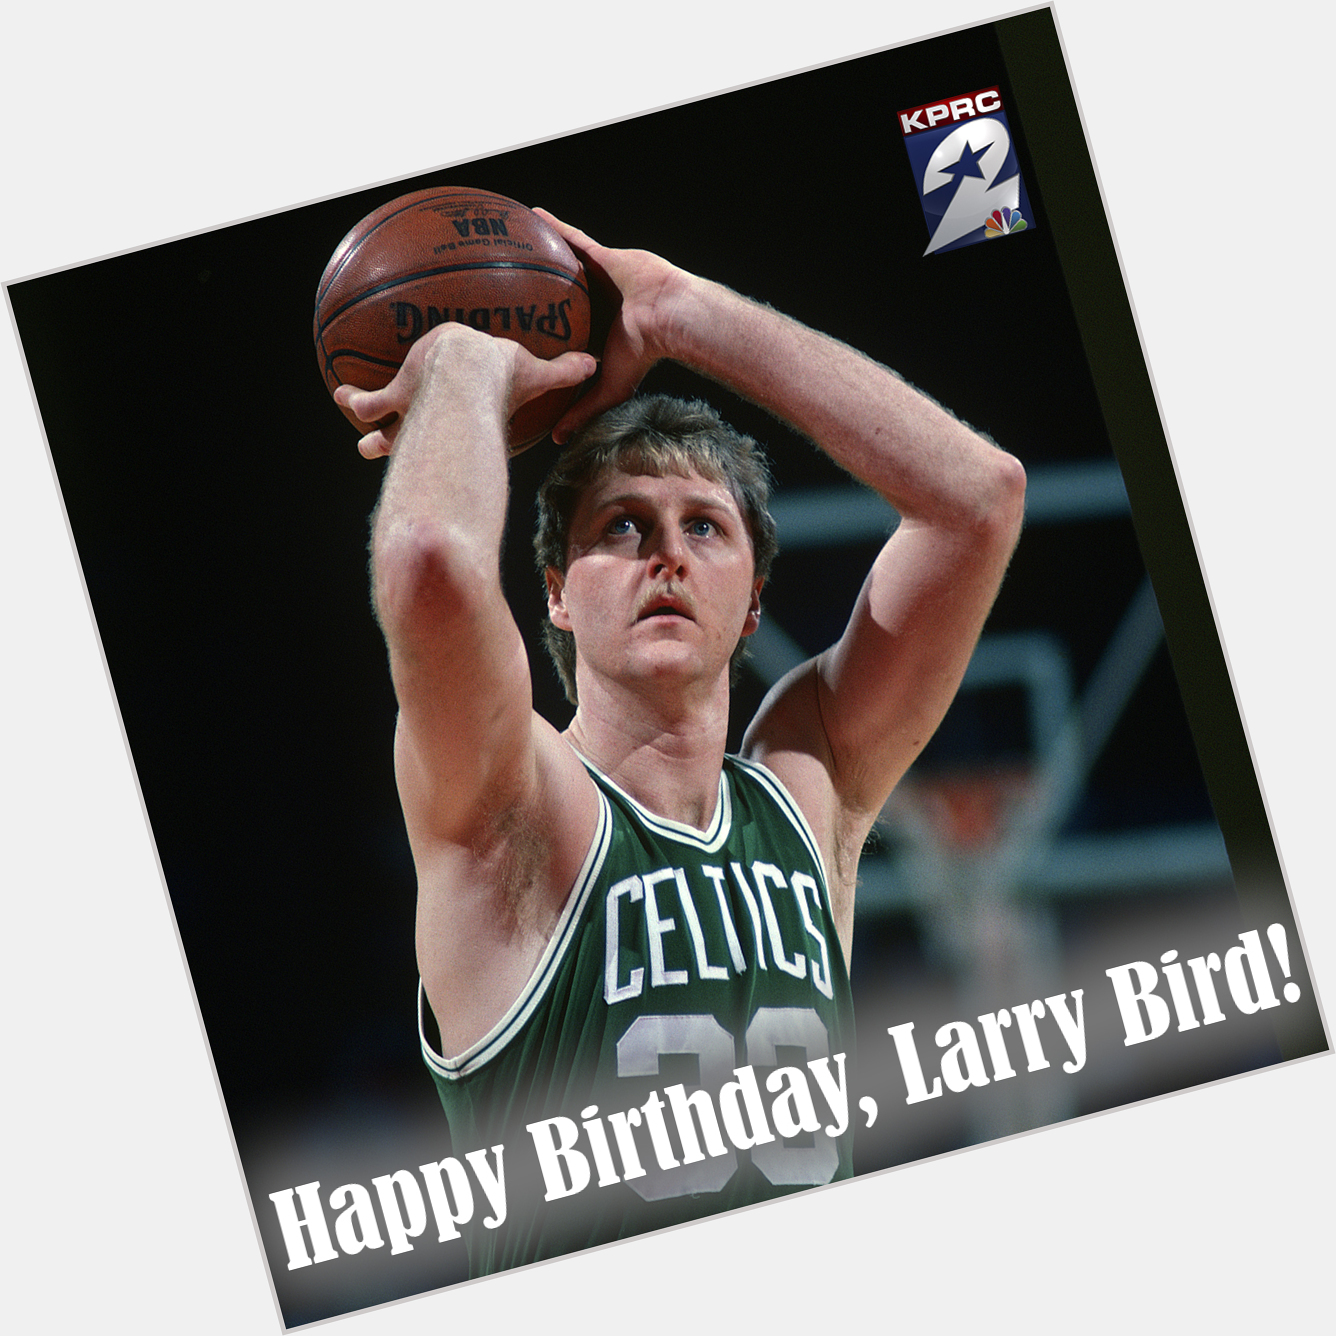 Happy Birthday, Larry Bird! He is 64 years old today. 